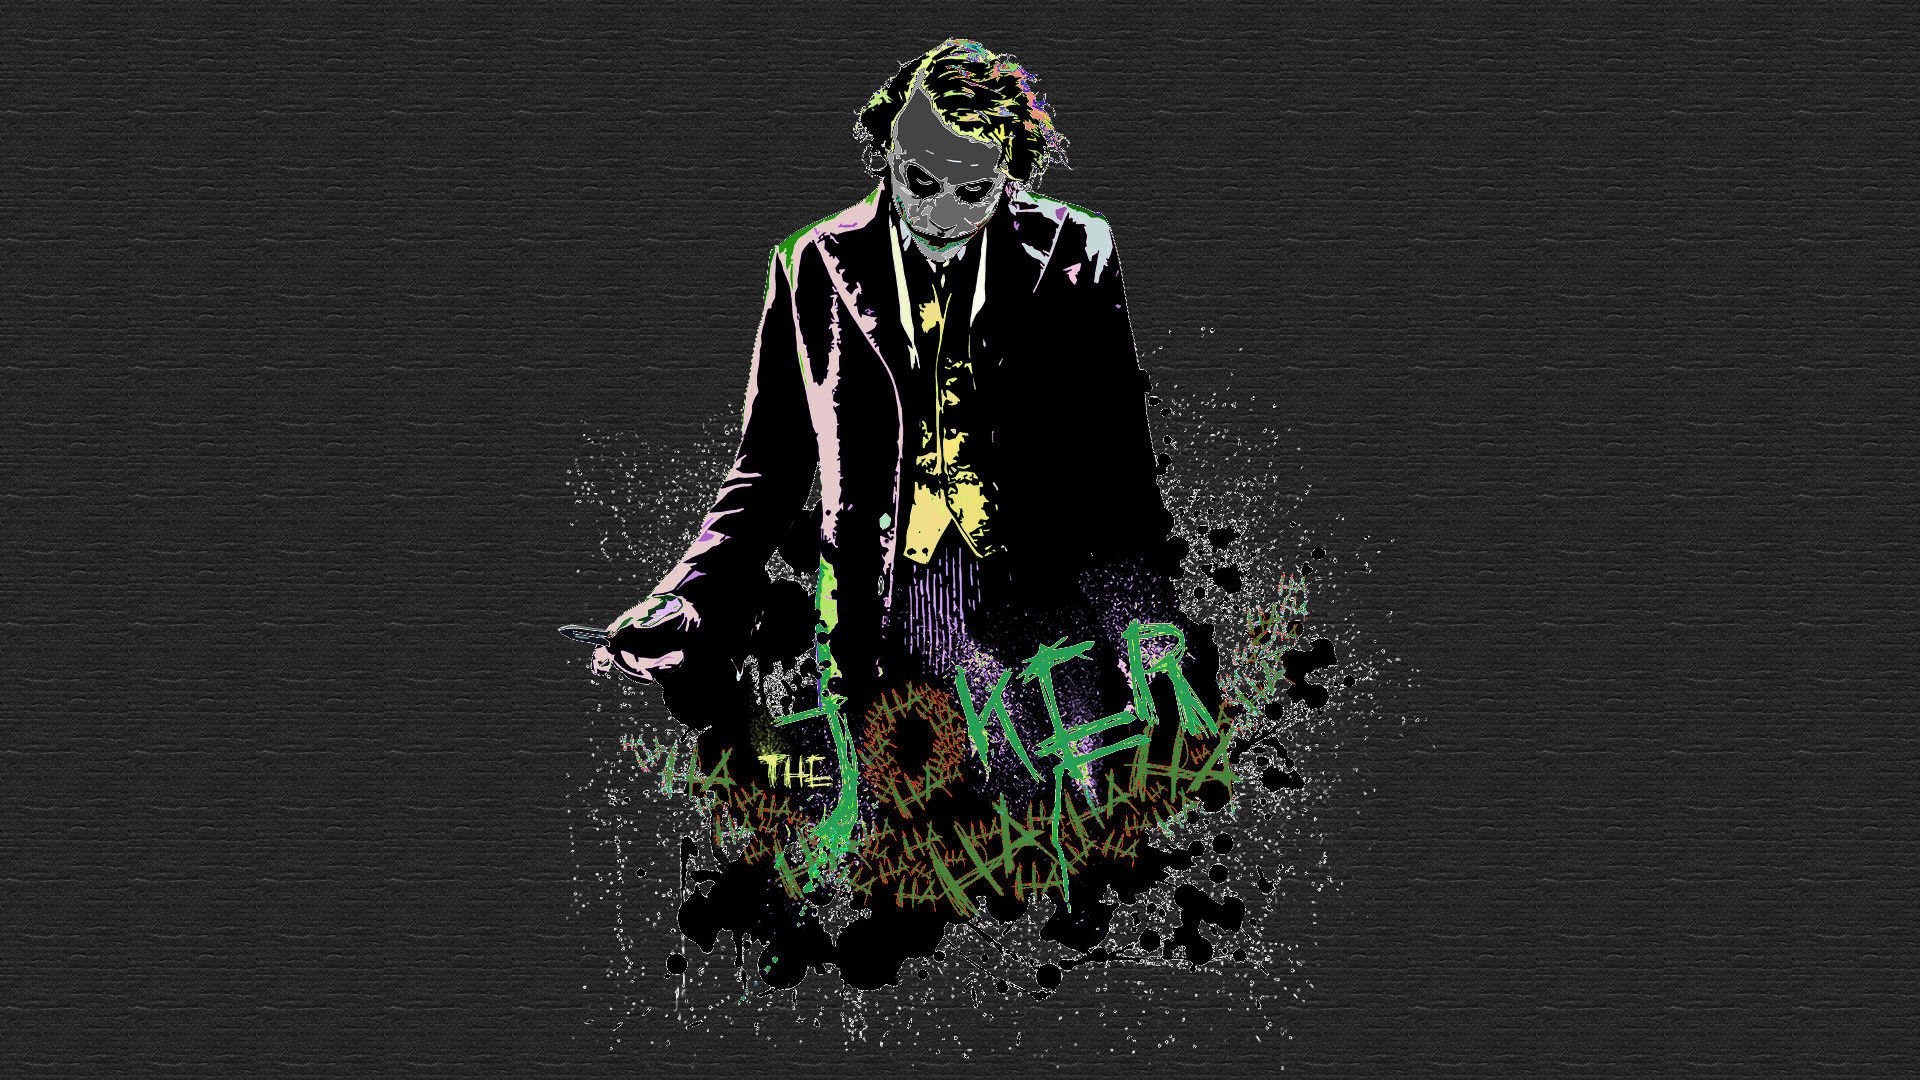 Heath Ledger Joker Wallpaper wallpaper.